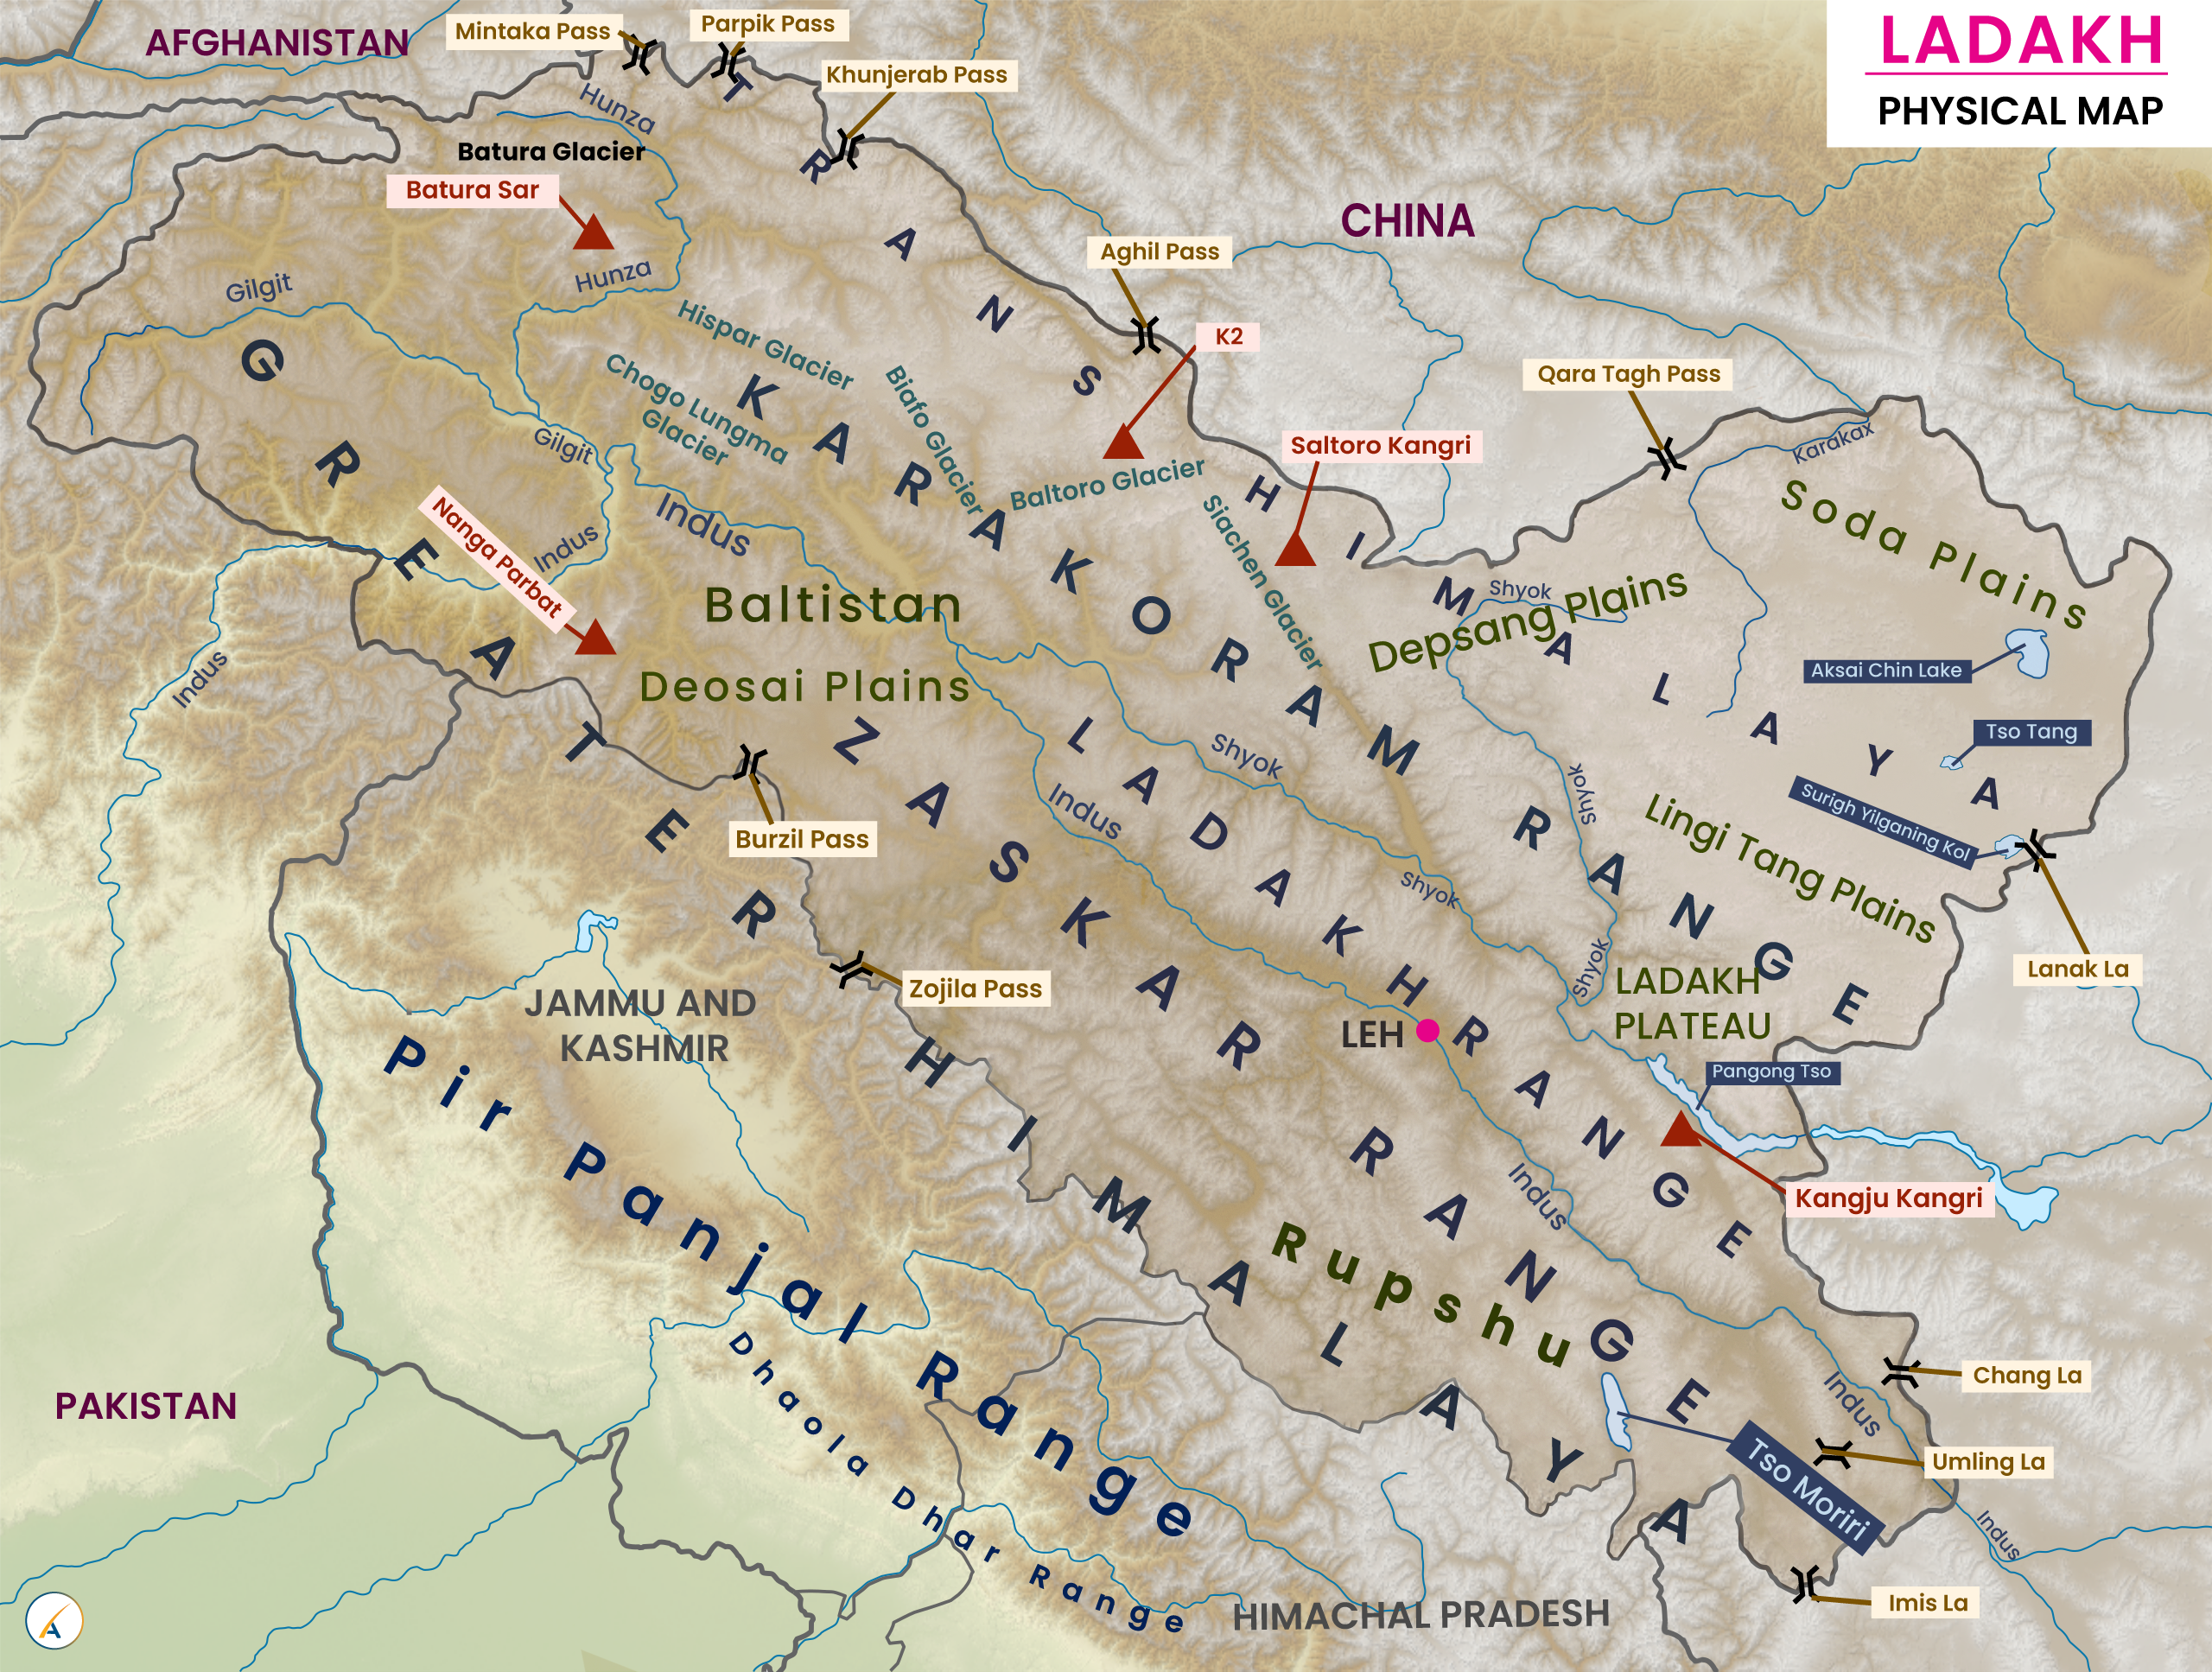 Ladakh Physical Map